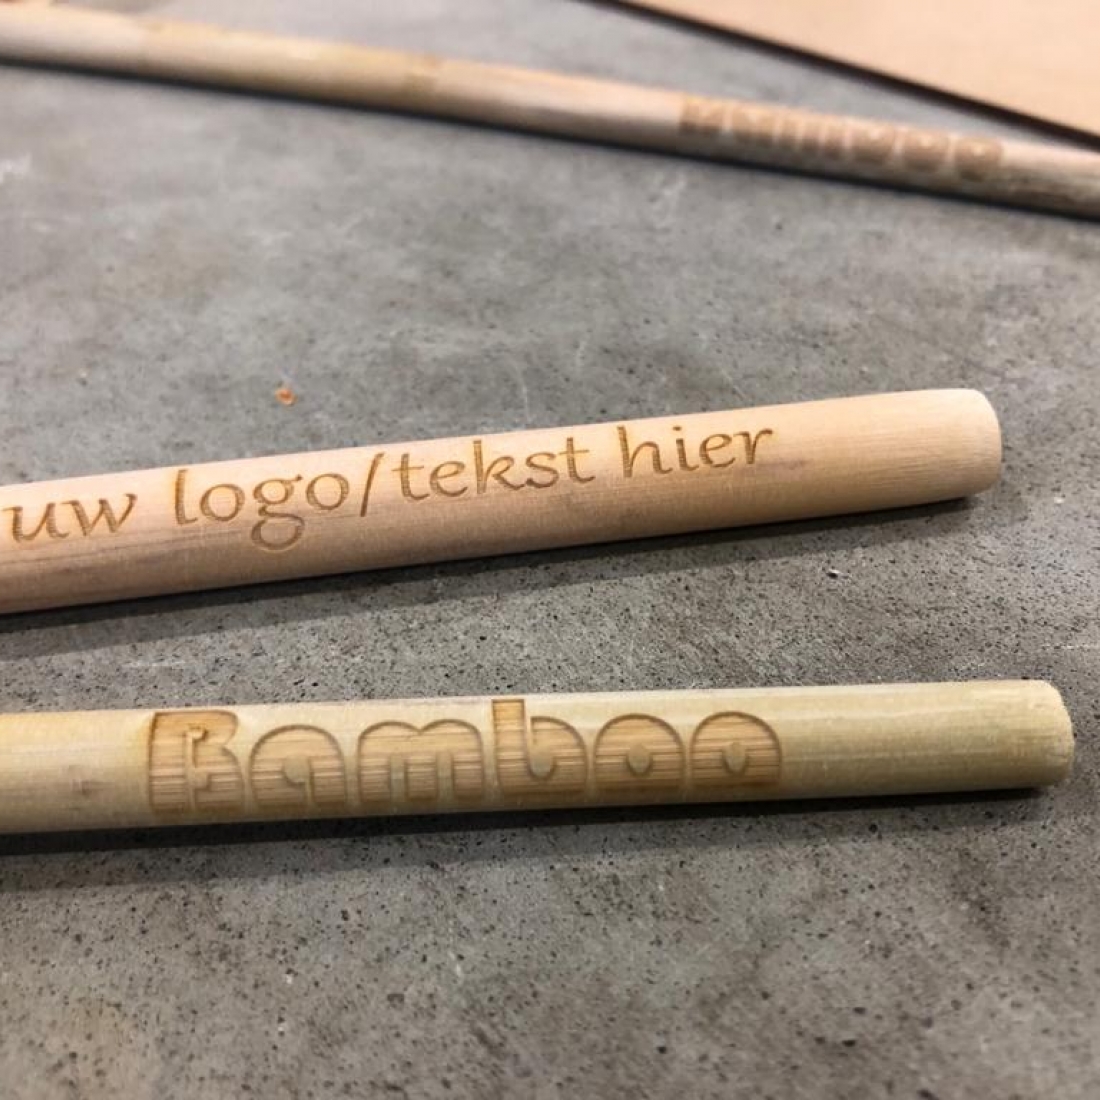 Bamboe rietjes